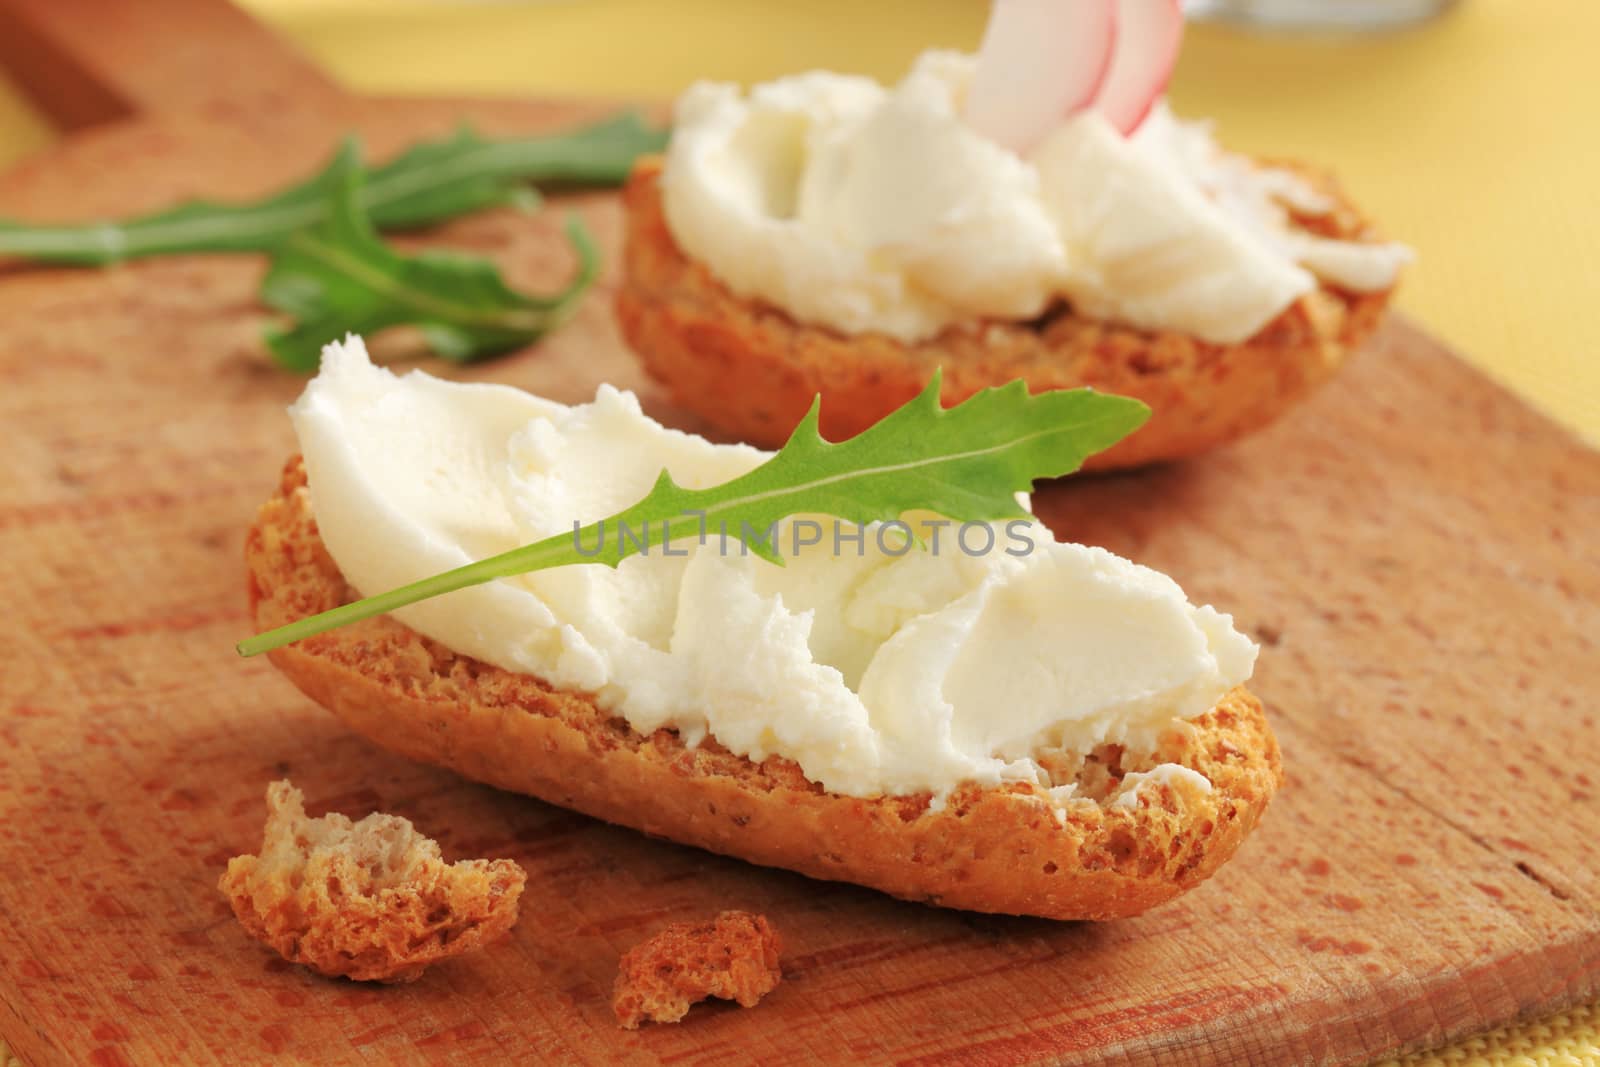 Crispy rolls and cheese spread - closeup